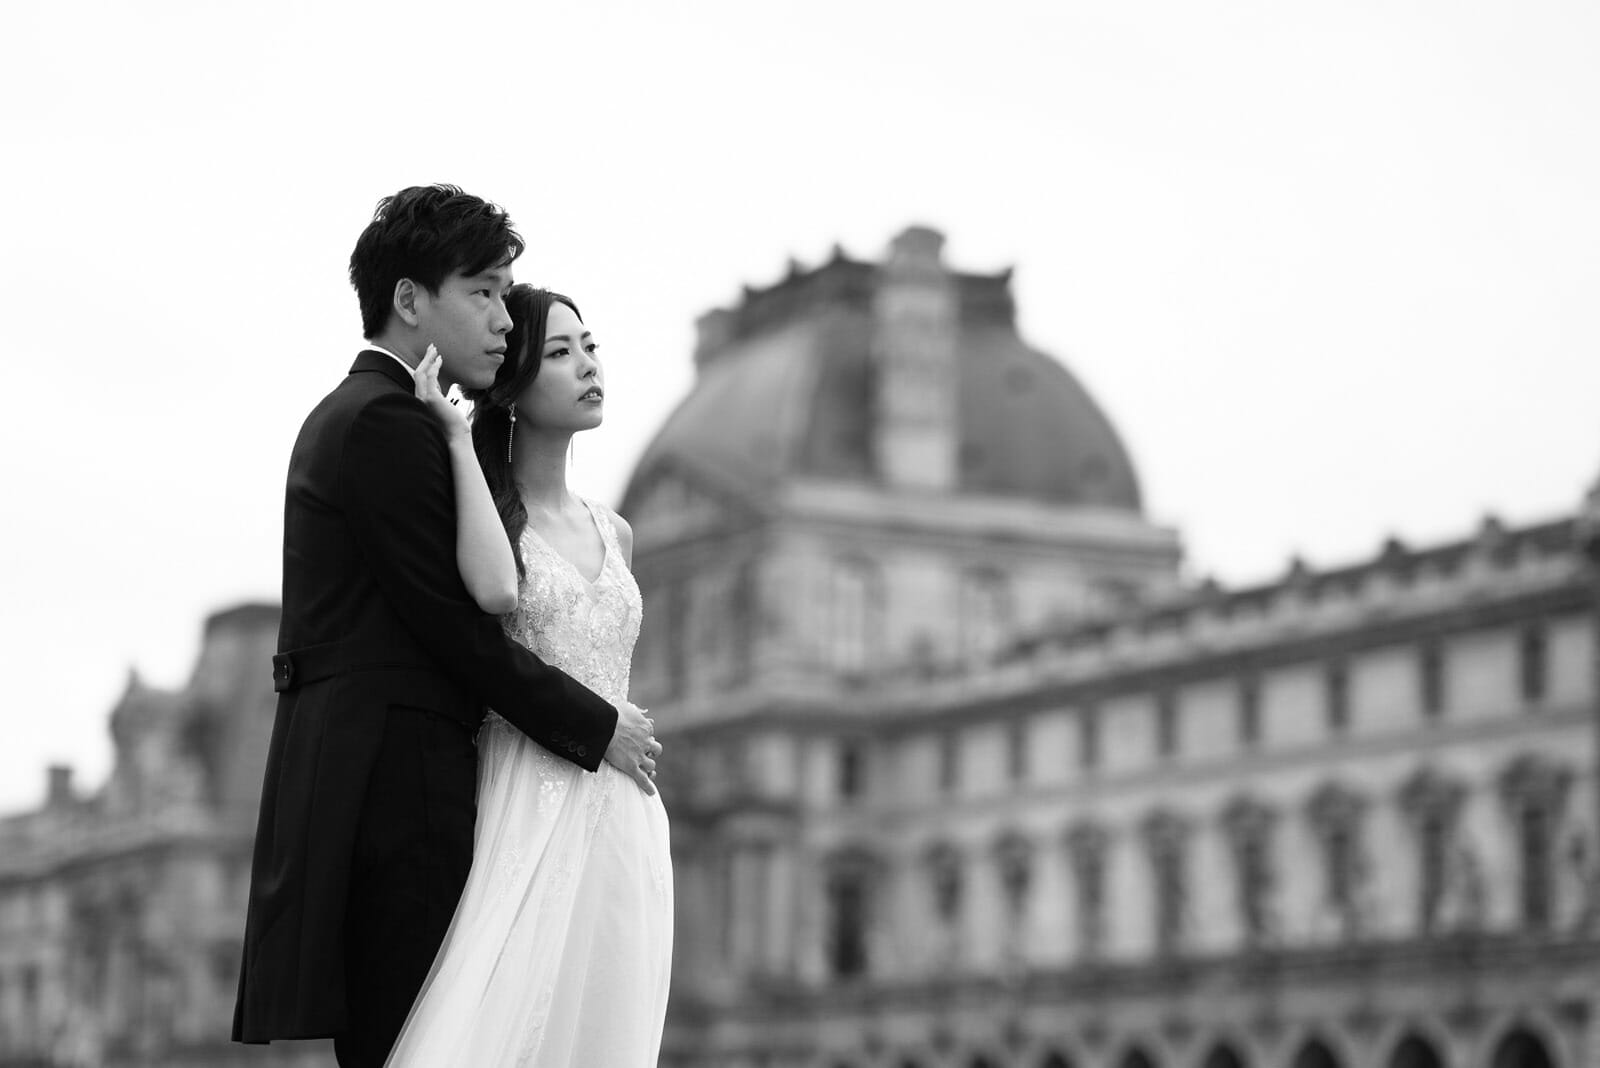 Paris pre-wedding photoshoot at the Louvre Museum